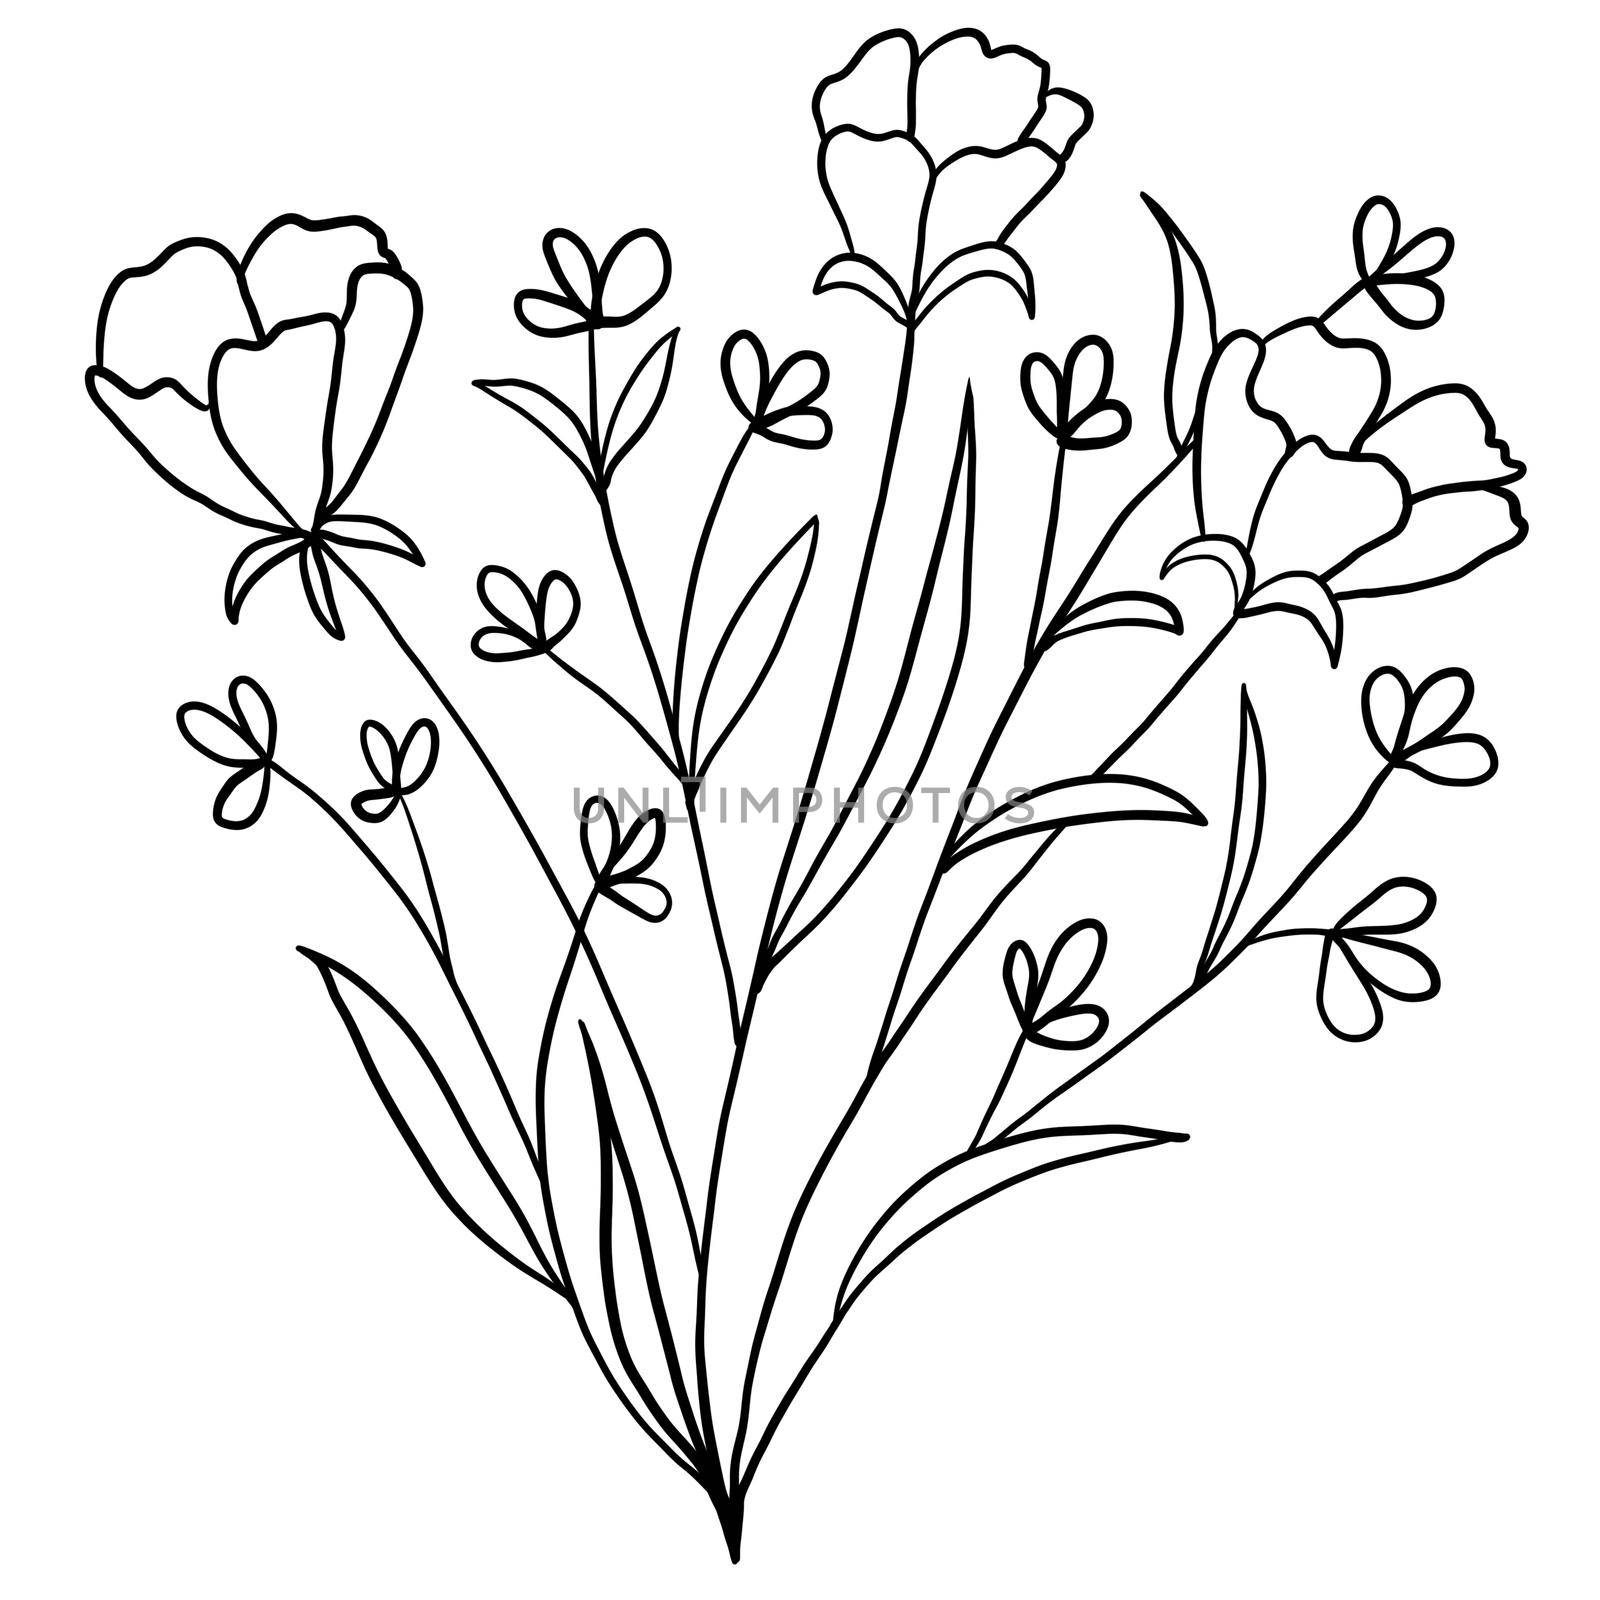 Hand drawn floral flower leaves illustration, black white elegant wedding ornament, Line art minimalism tatoo style design summer spring nature branch foliage blossom. by Lagmar